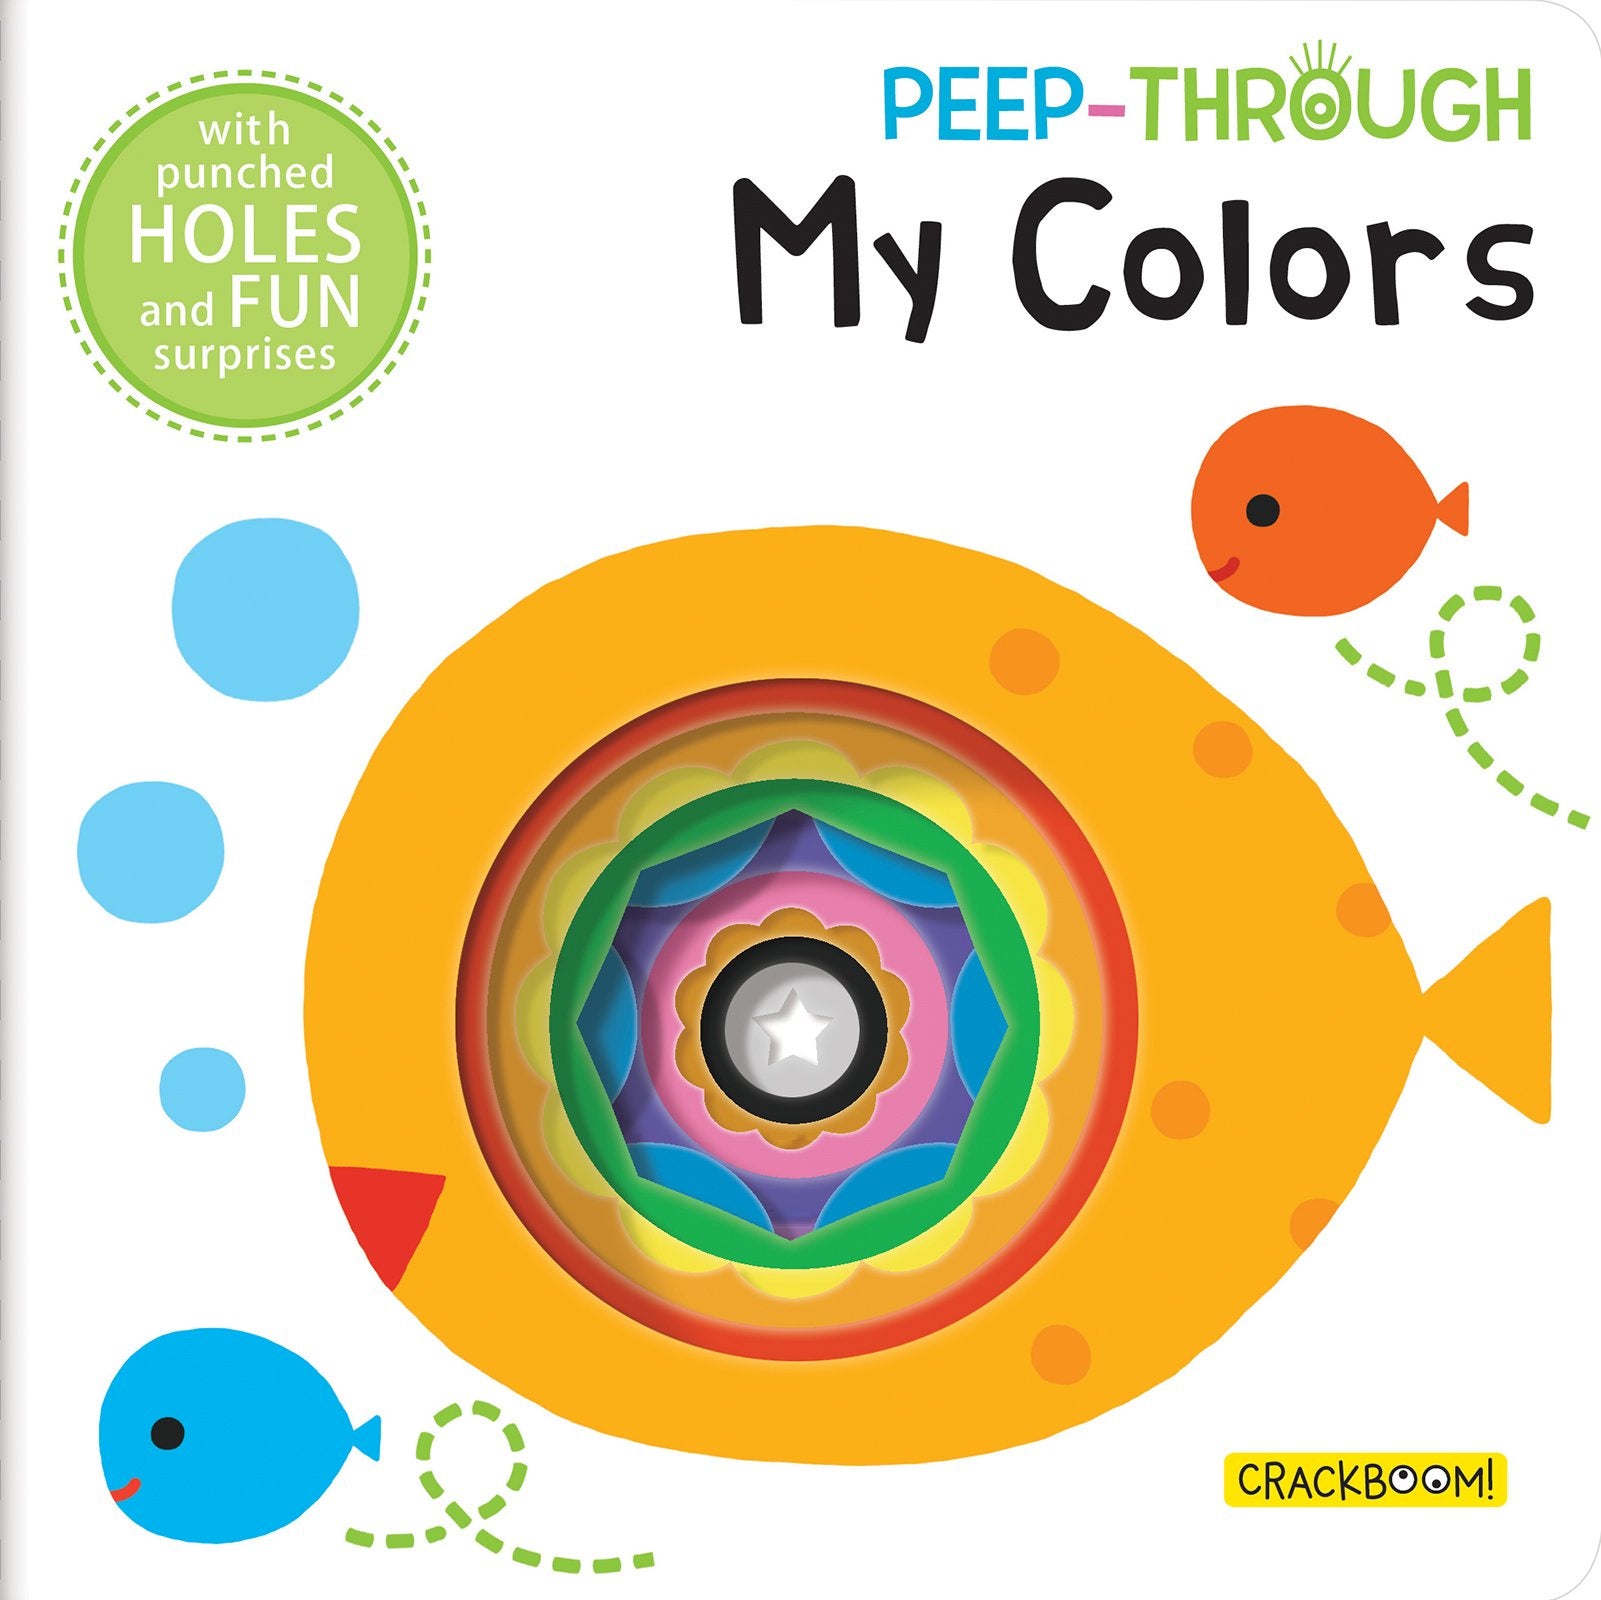 Peep-Through My Colors